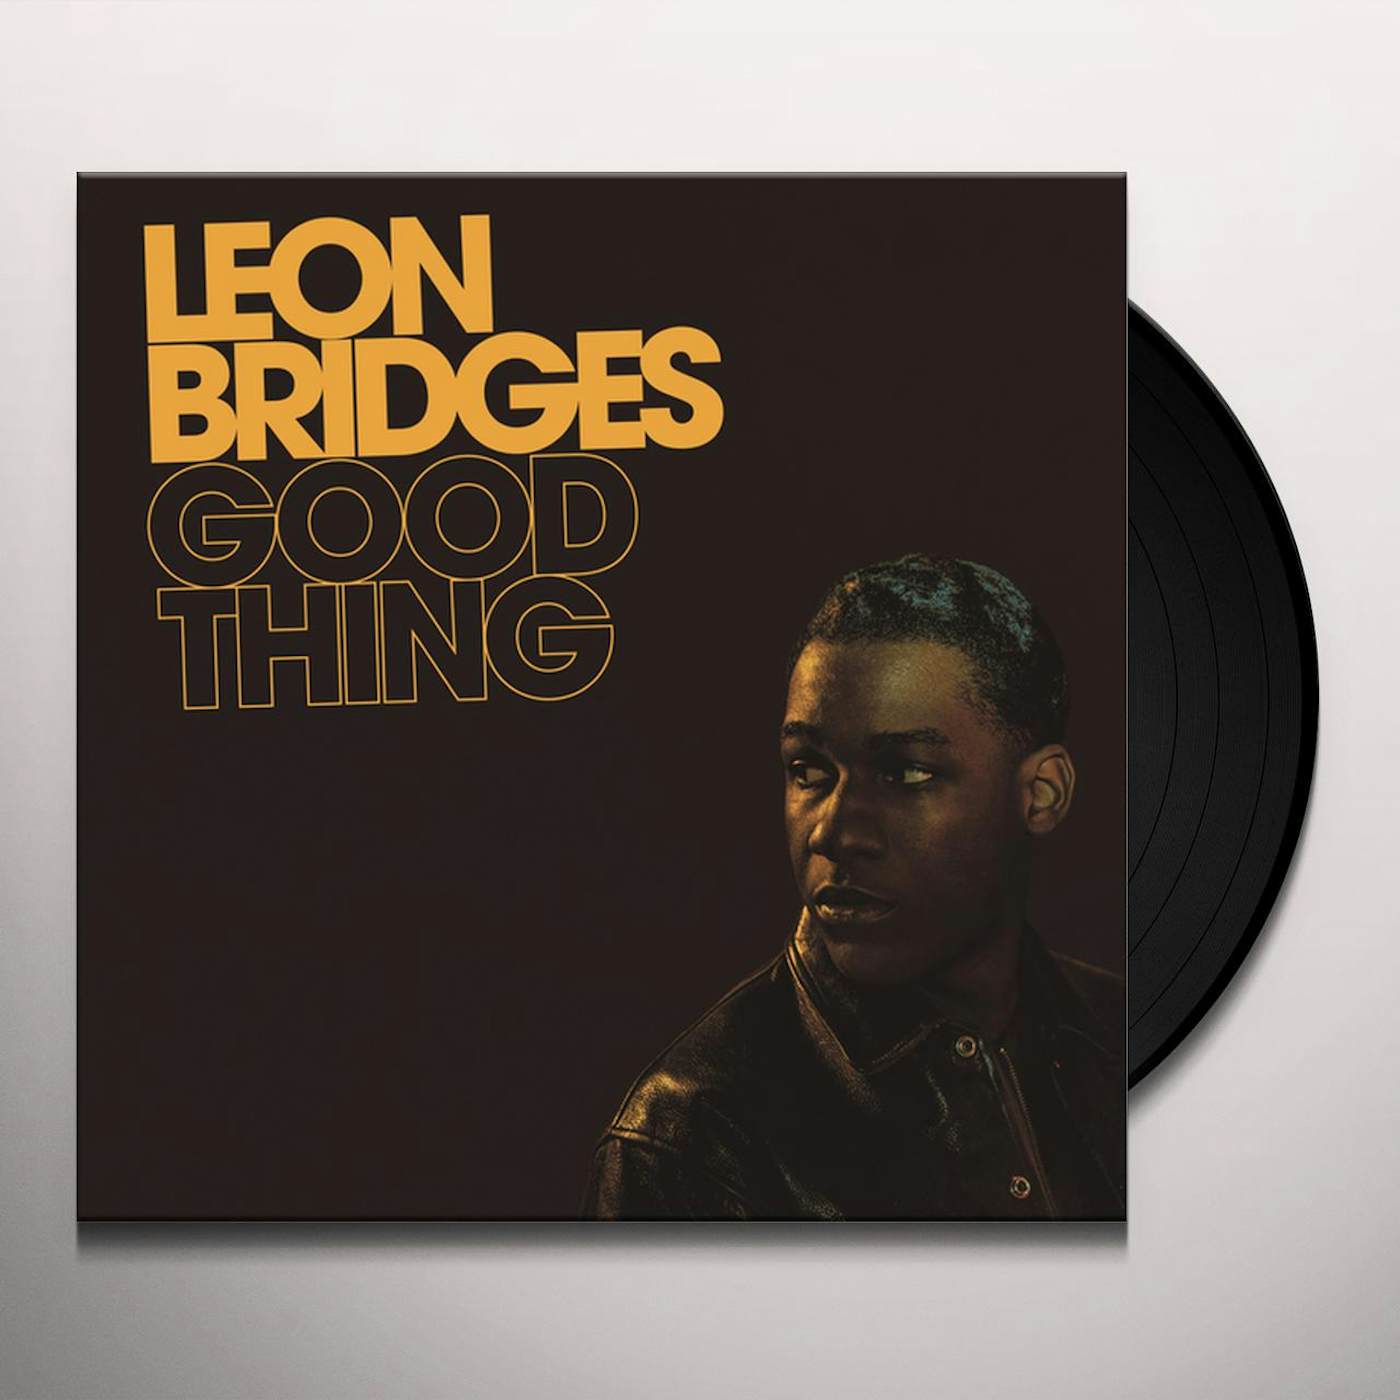 Leon Bridges GOOD THING - Limited Edition 180 Gram Vinyl Record